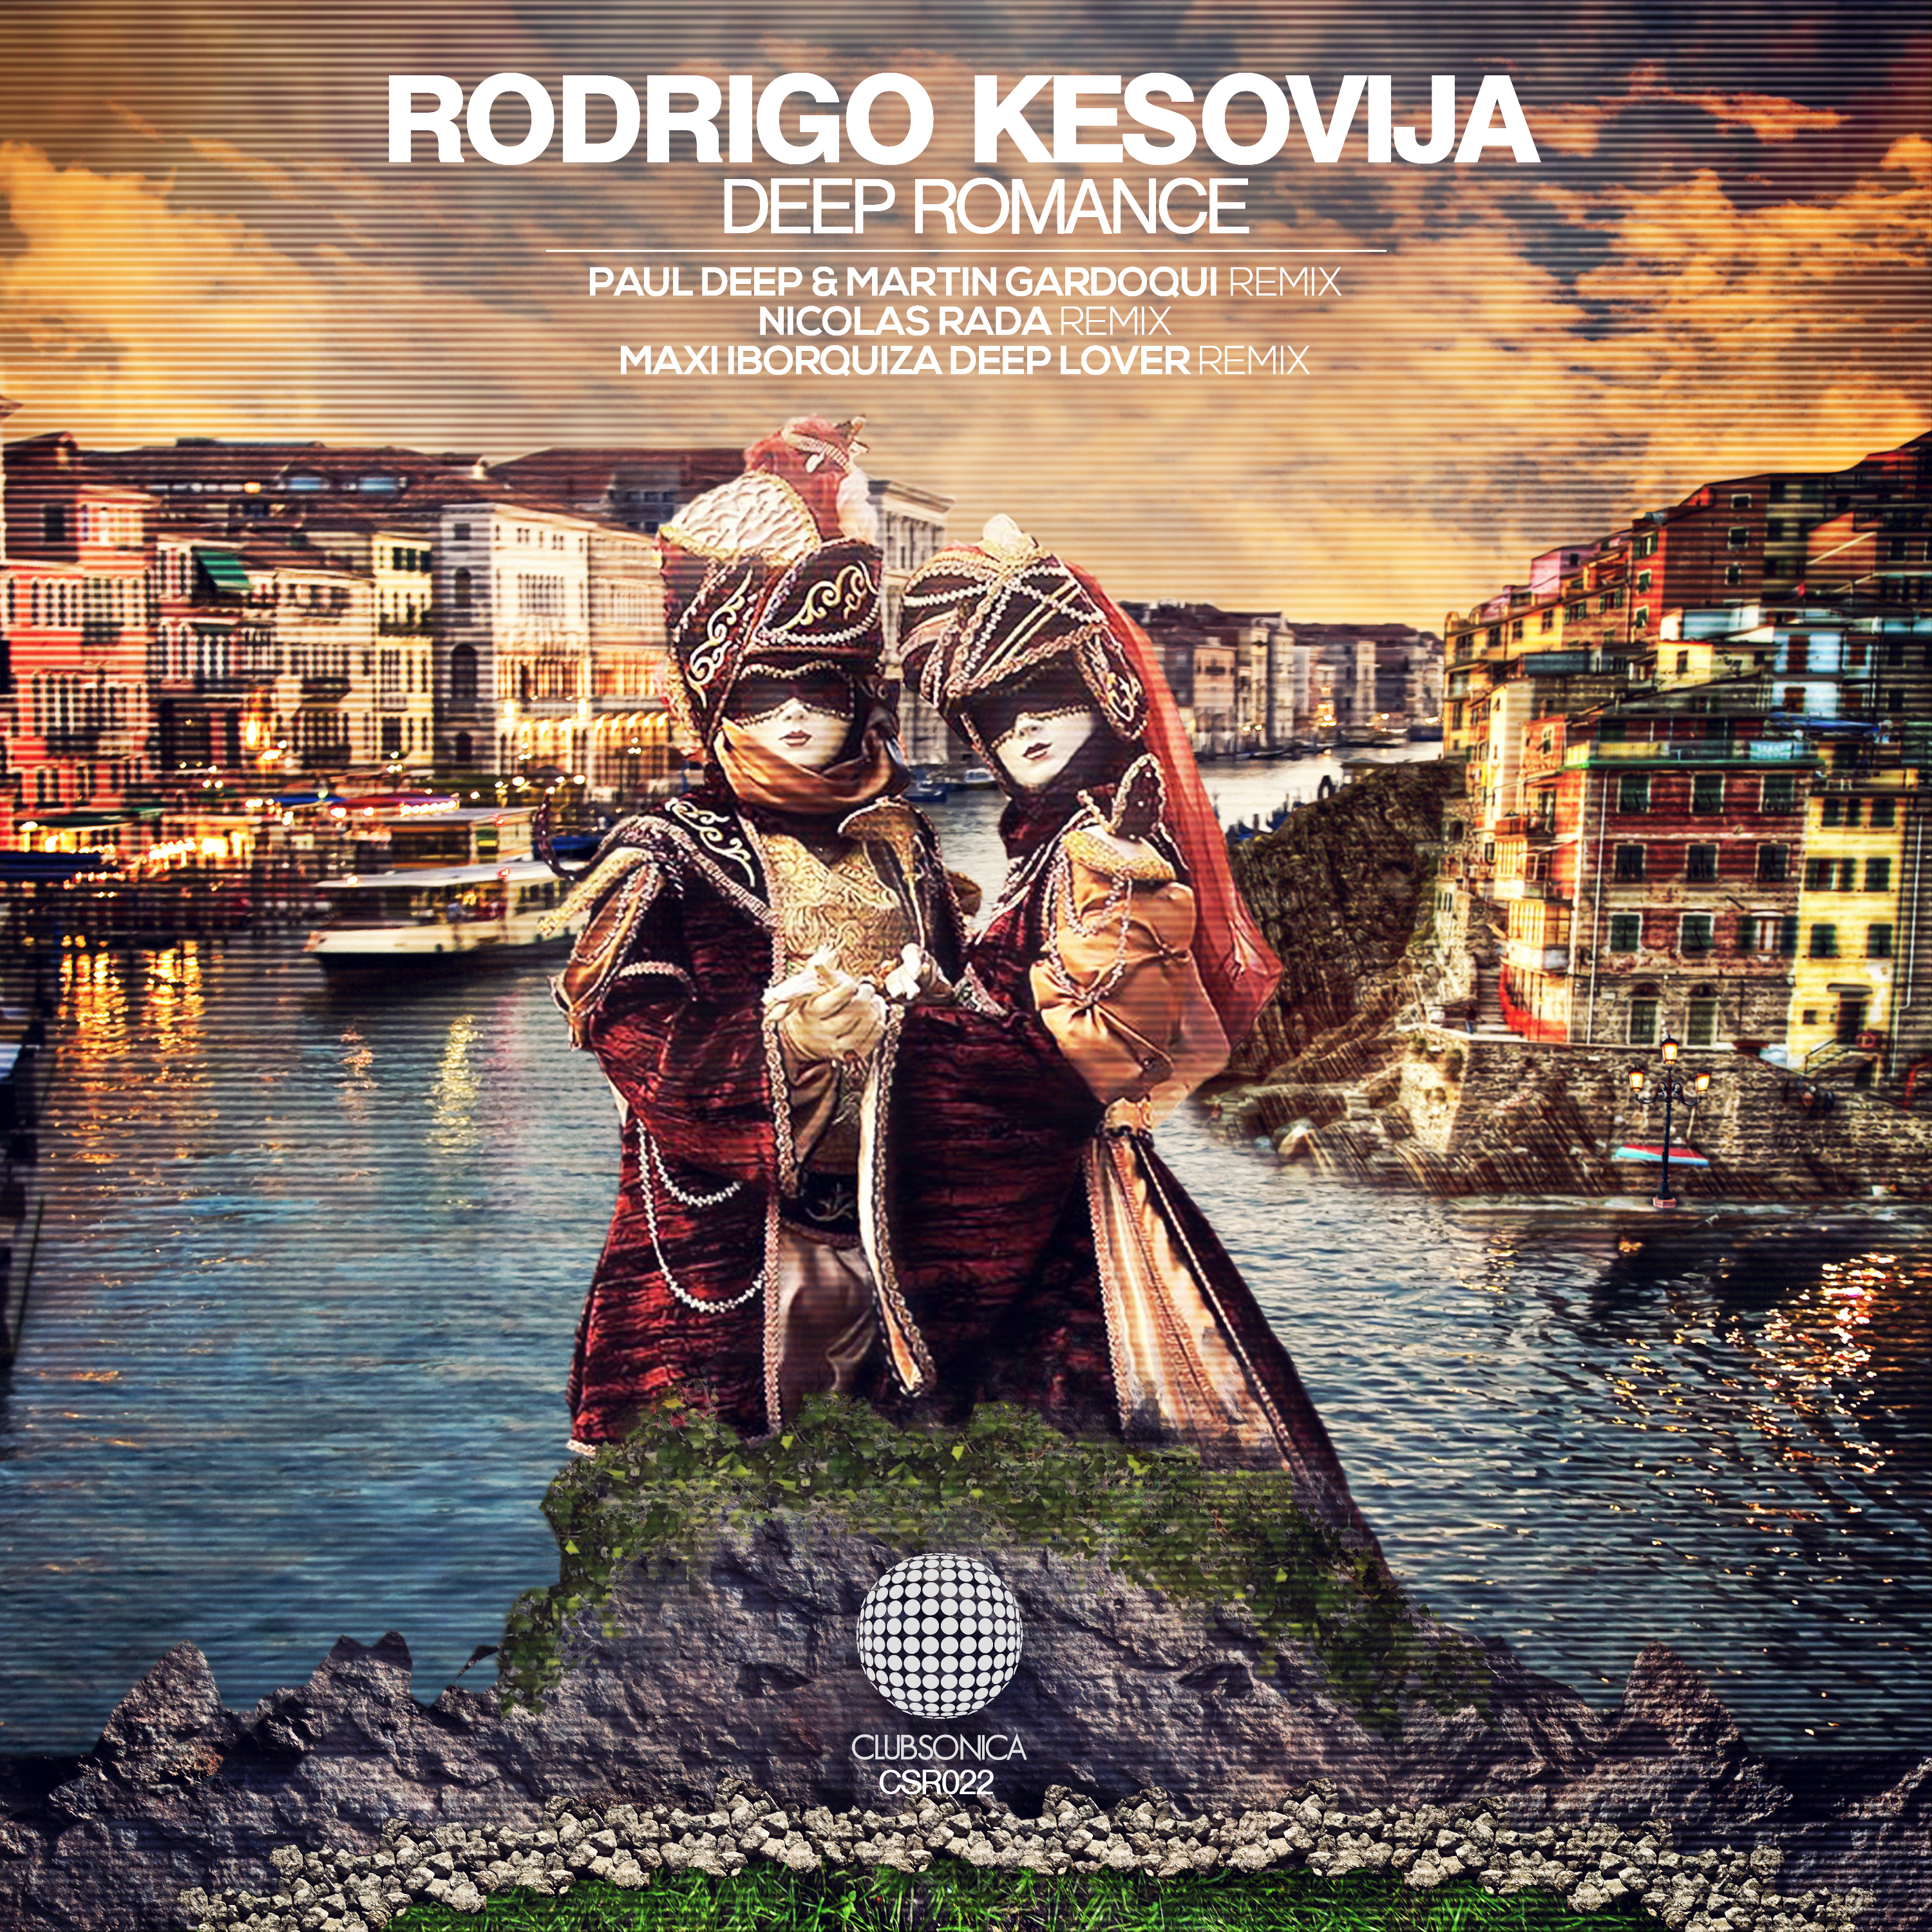 Rodrigo Kesovija - Deep Romance (Clubsonica Records)